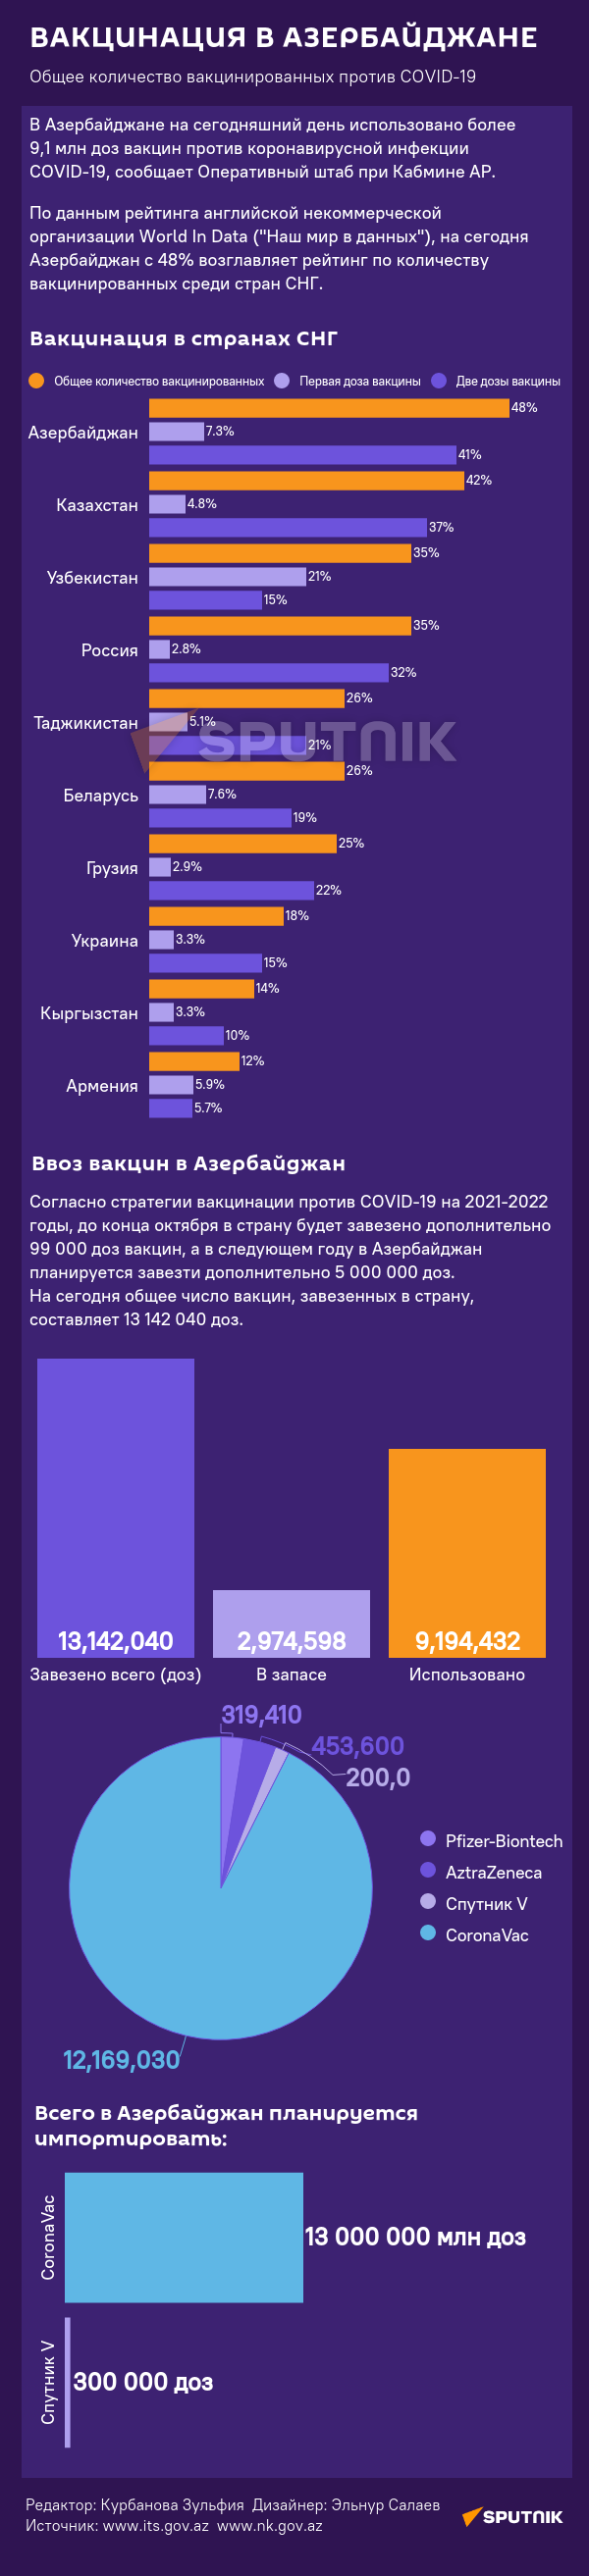 Инфографика: Вакцинация в Азербайджане - Sputnik Азербайджан